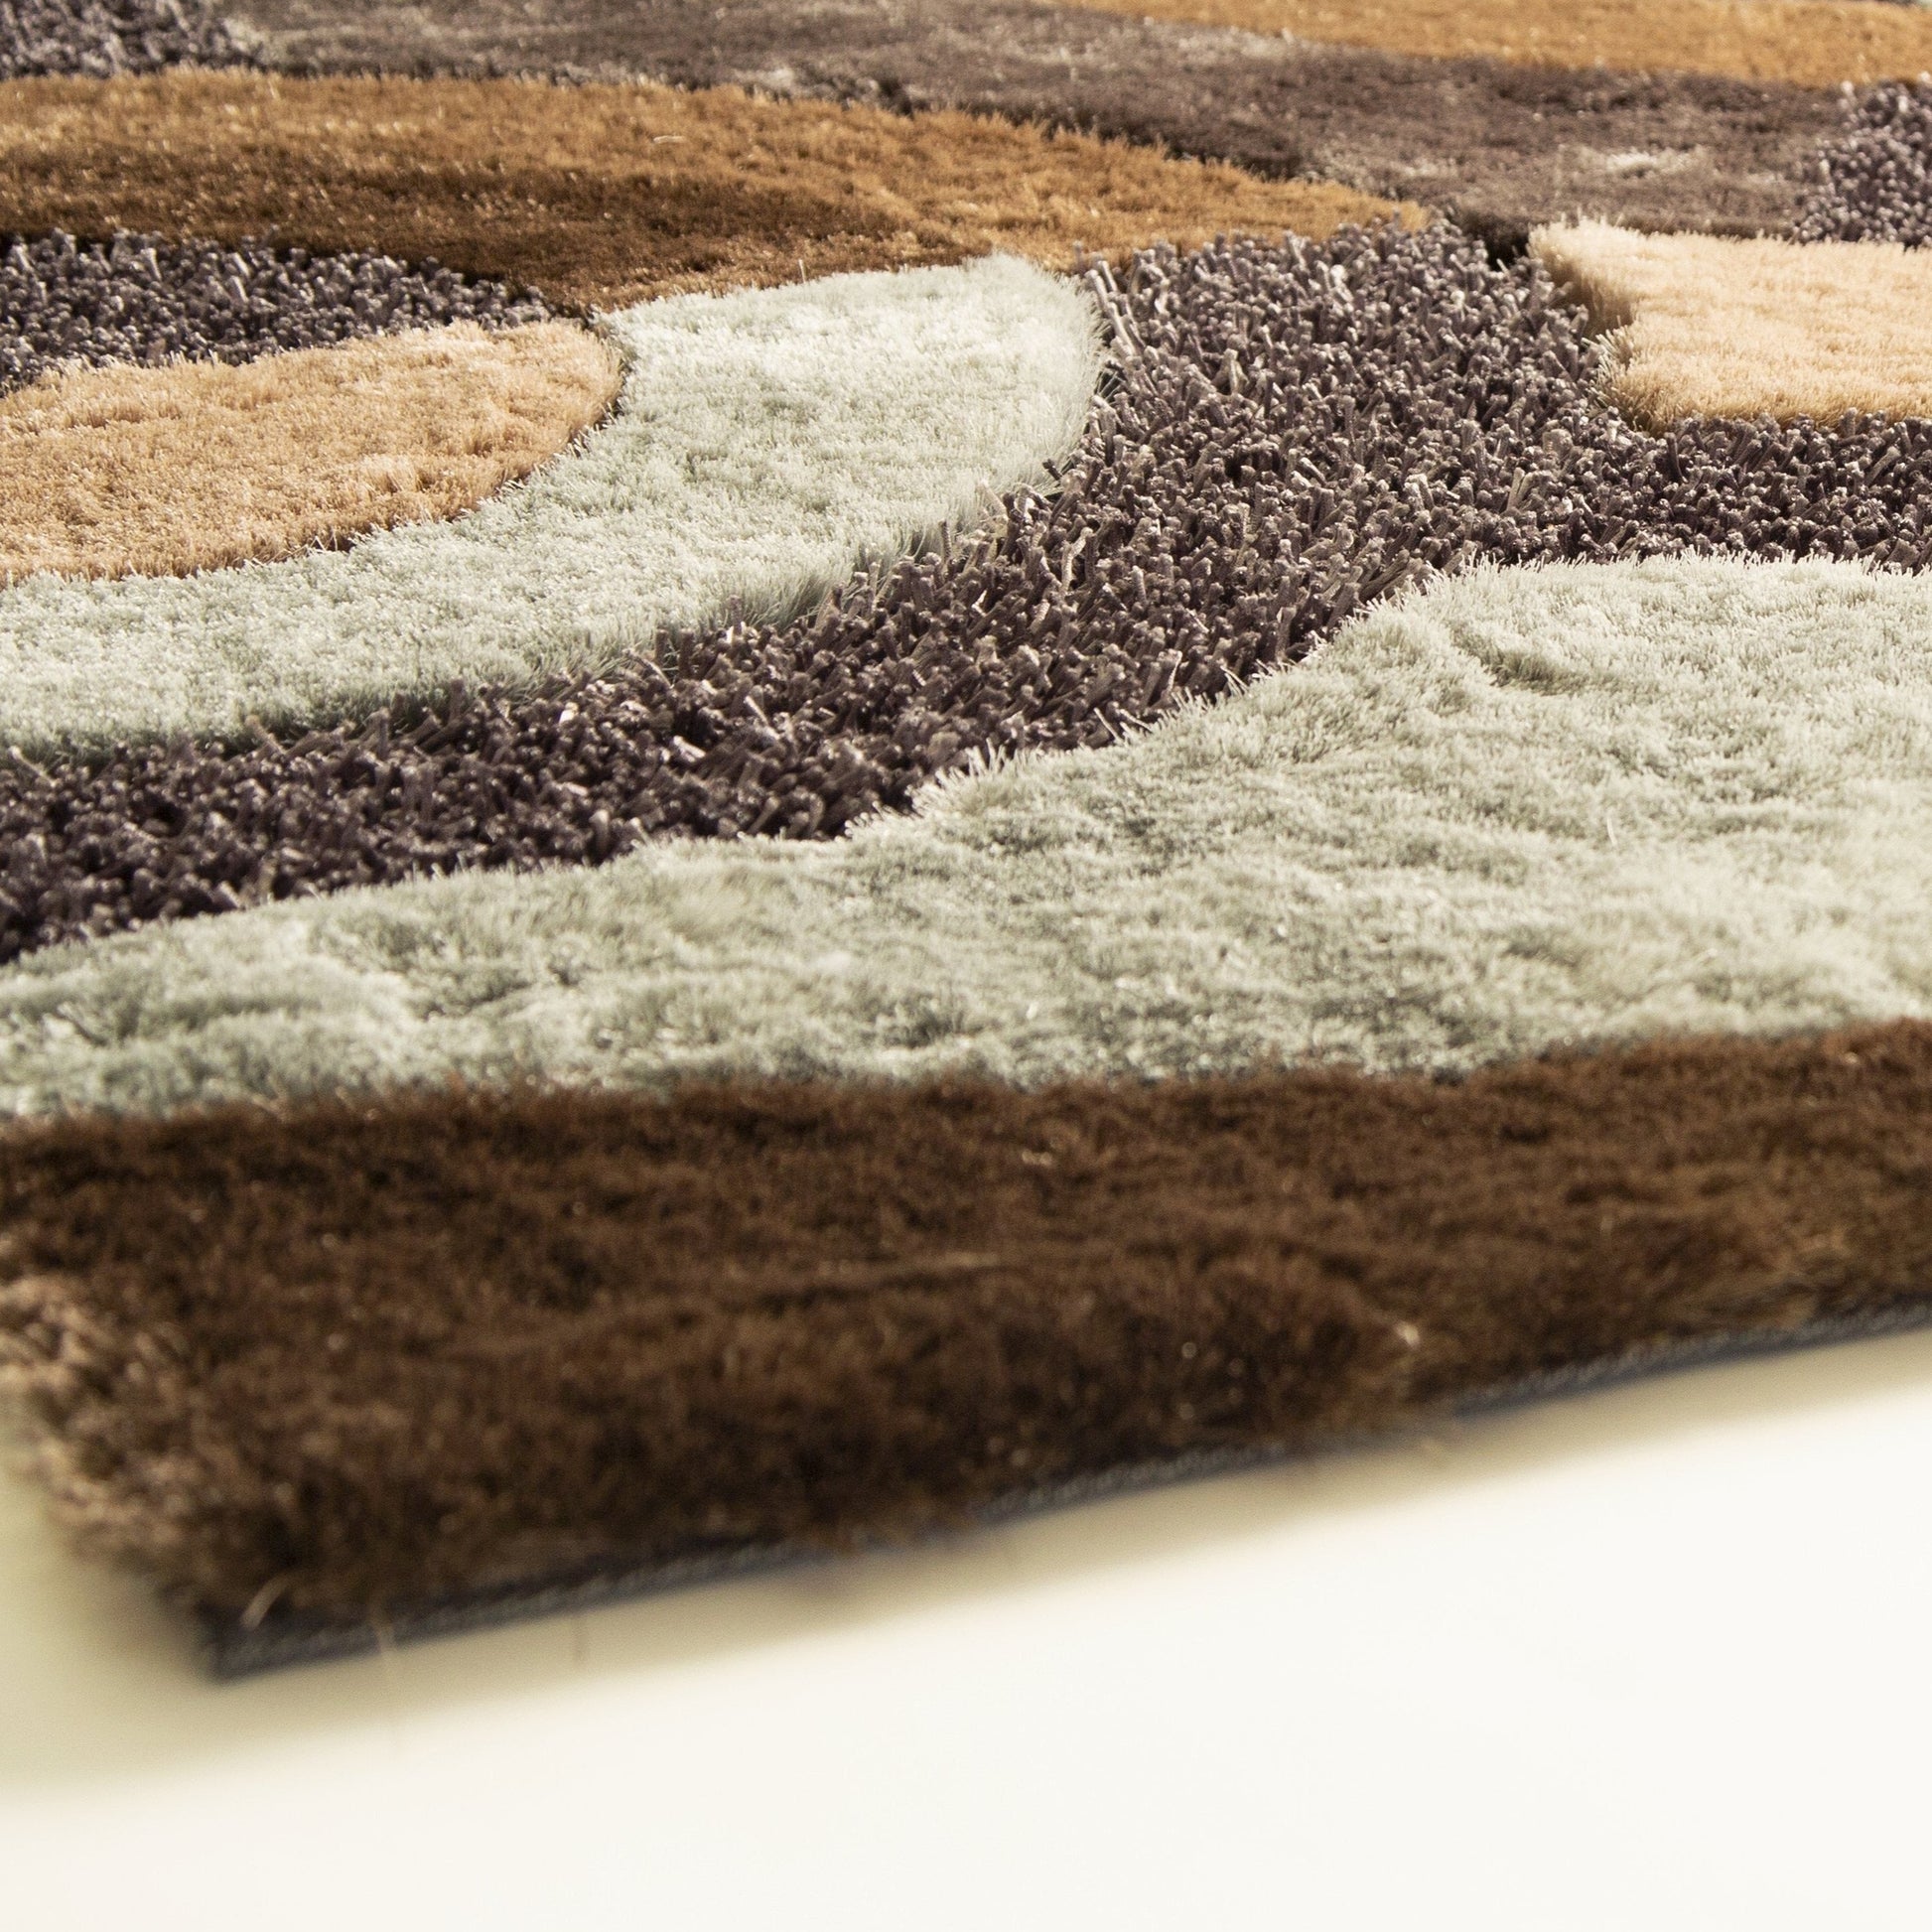 Circle Earth Tone Design Plush Fluffy Multi-textural Shag Area Rug/ Carpet